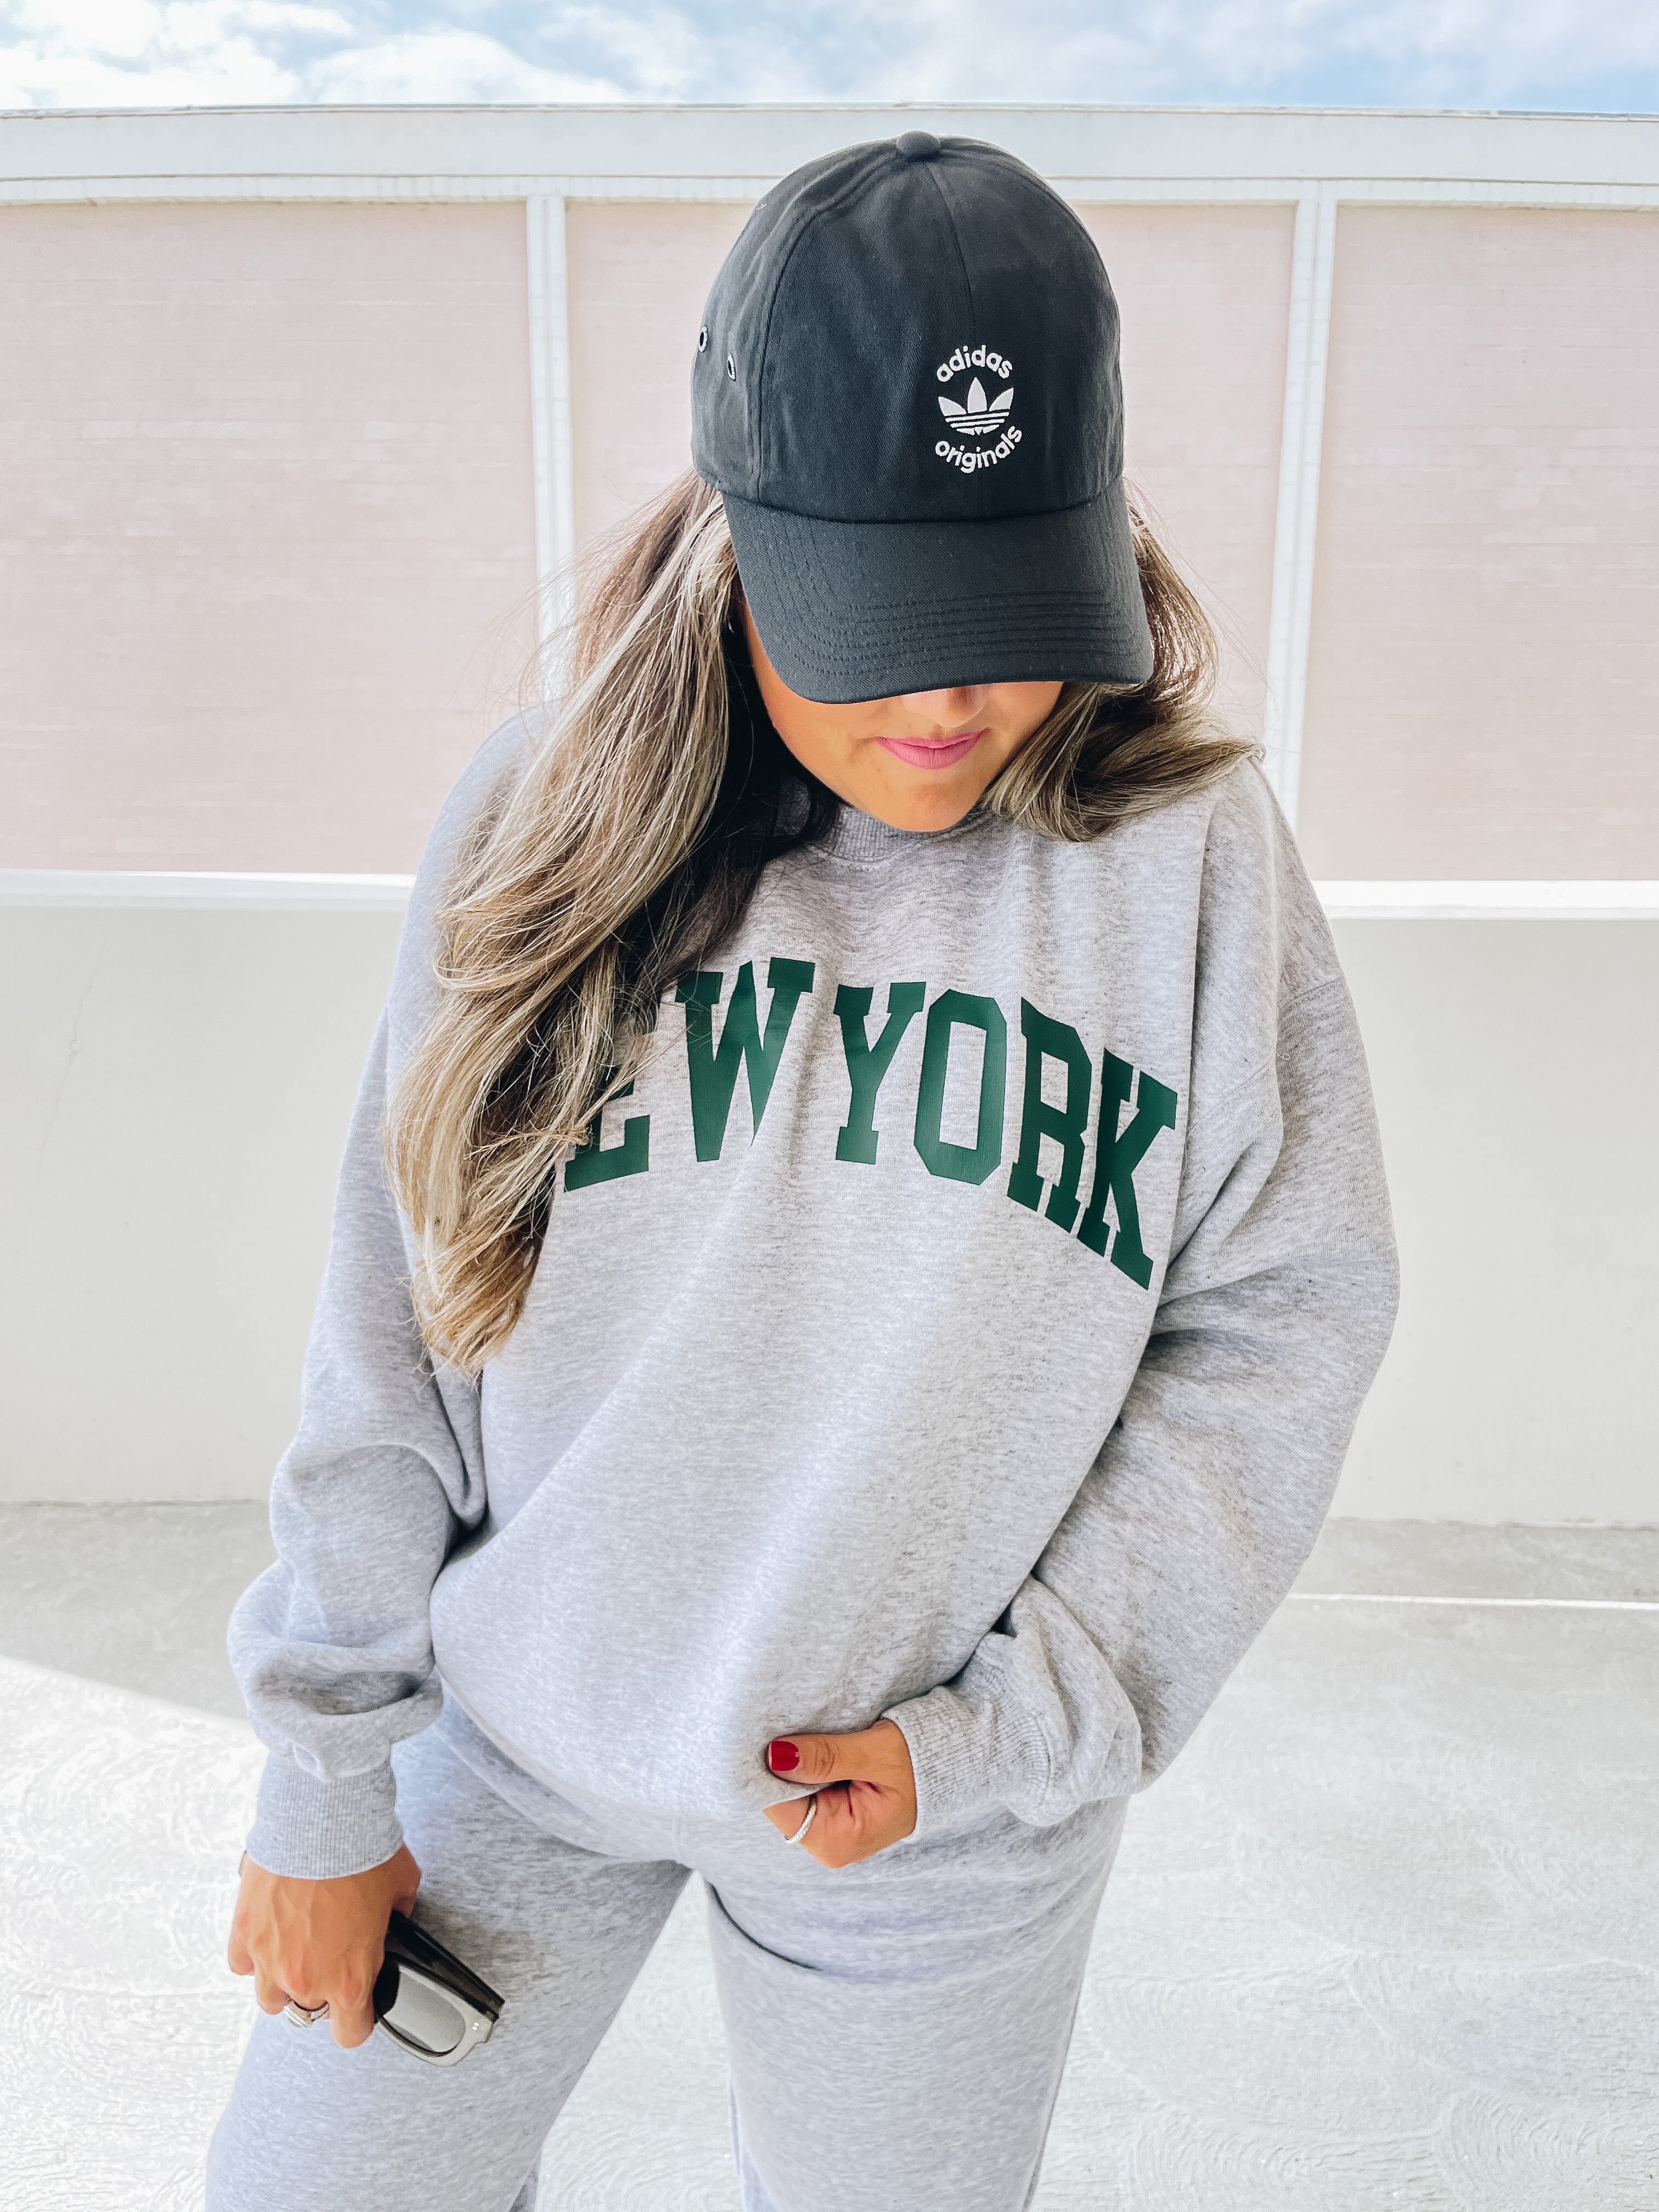 Take Me To New York Oversized Sweatshirt